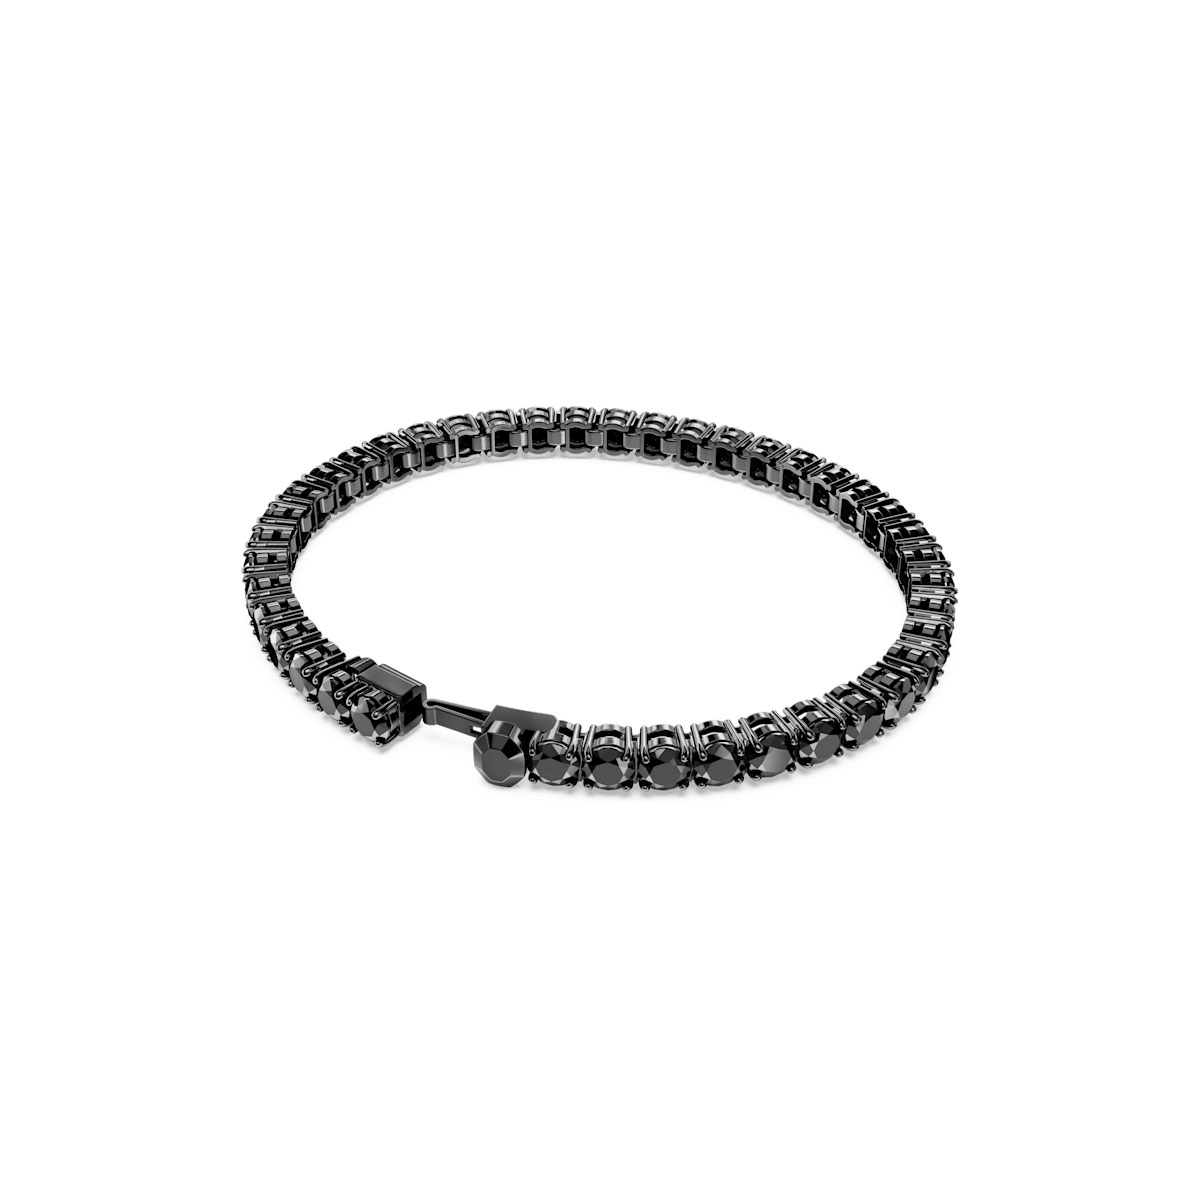 Swarovski Jewelry Black Round Cut and Ruthenium Matrix Tennis Bracelet